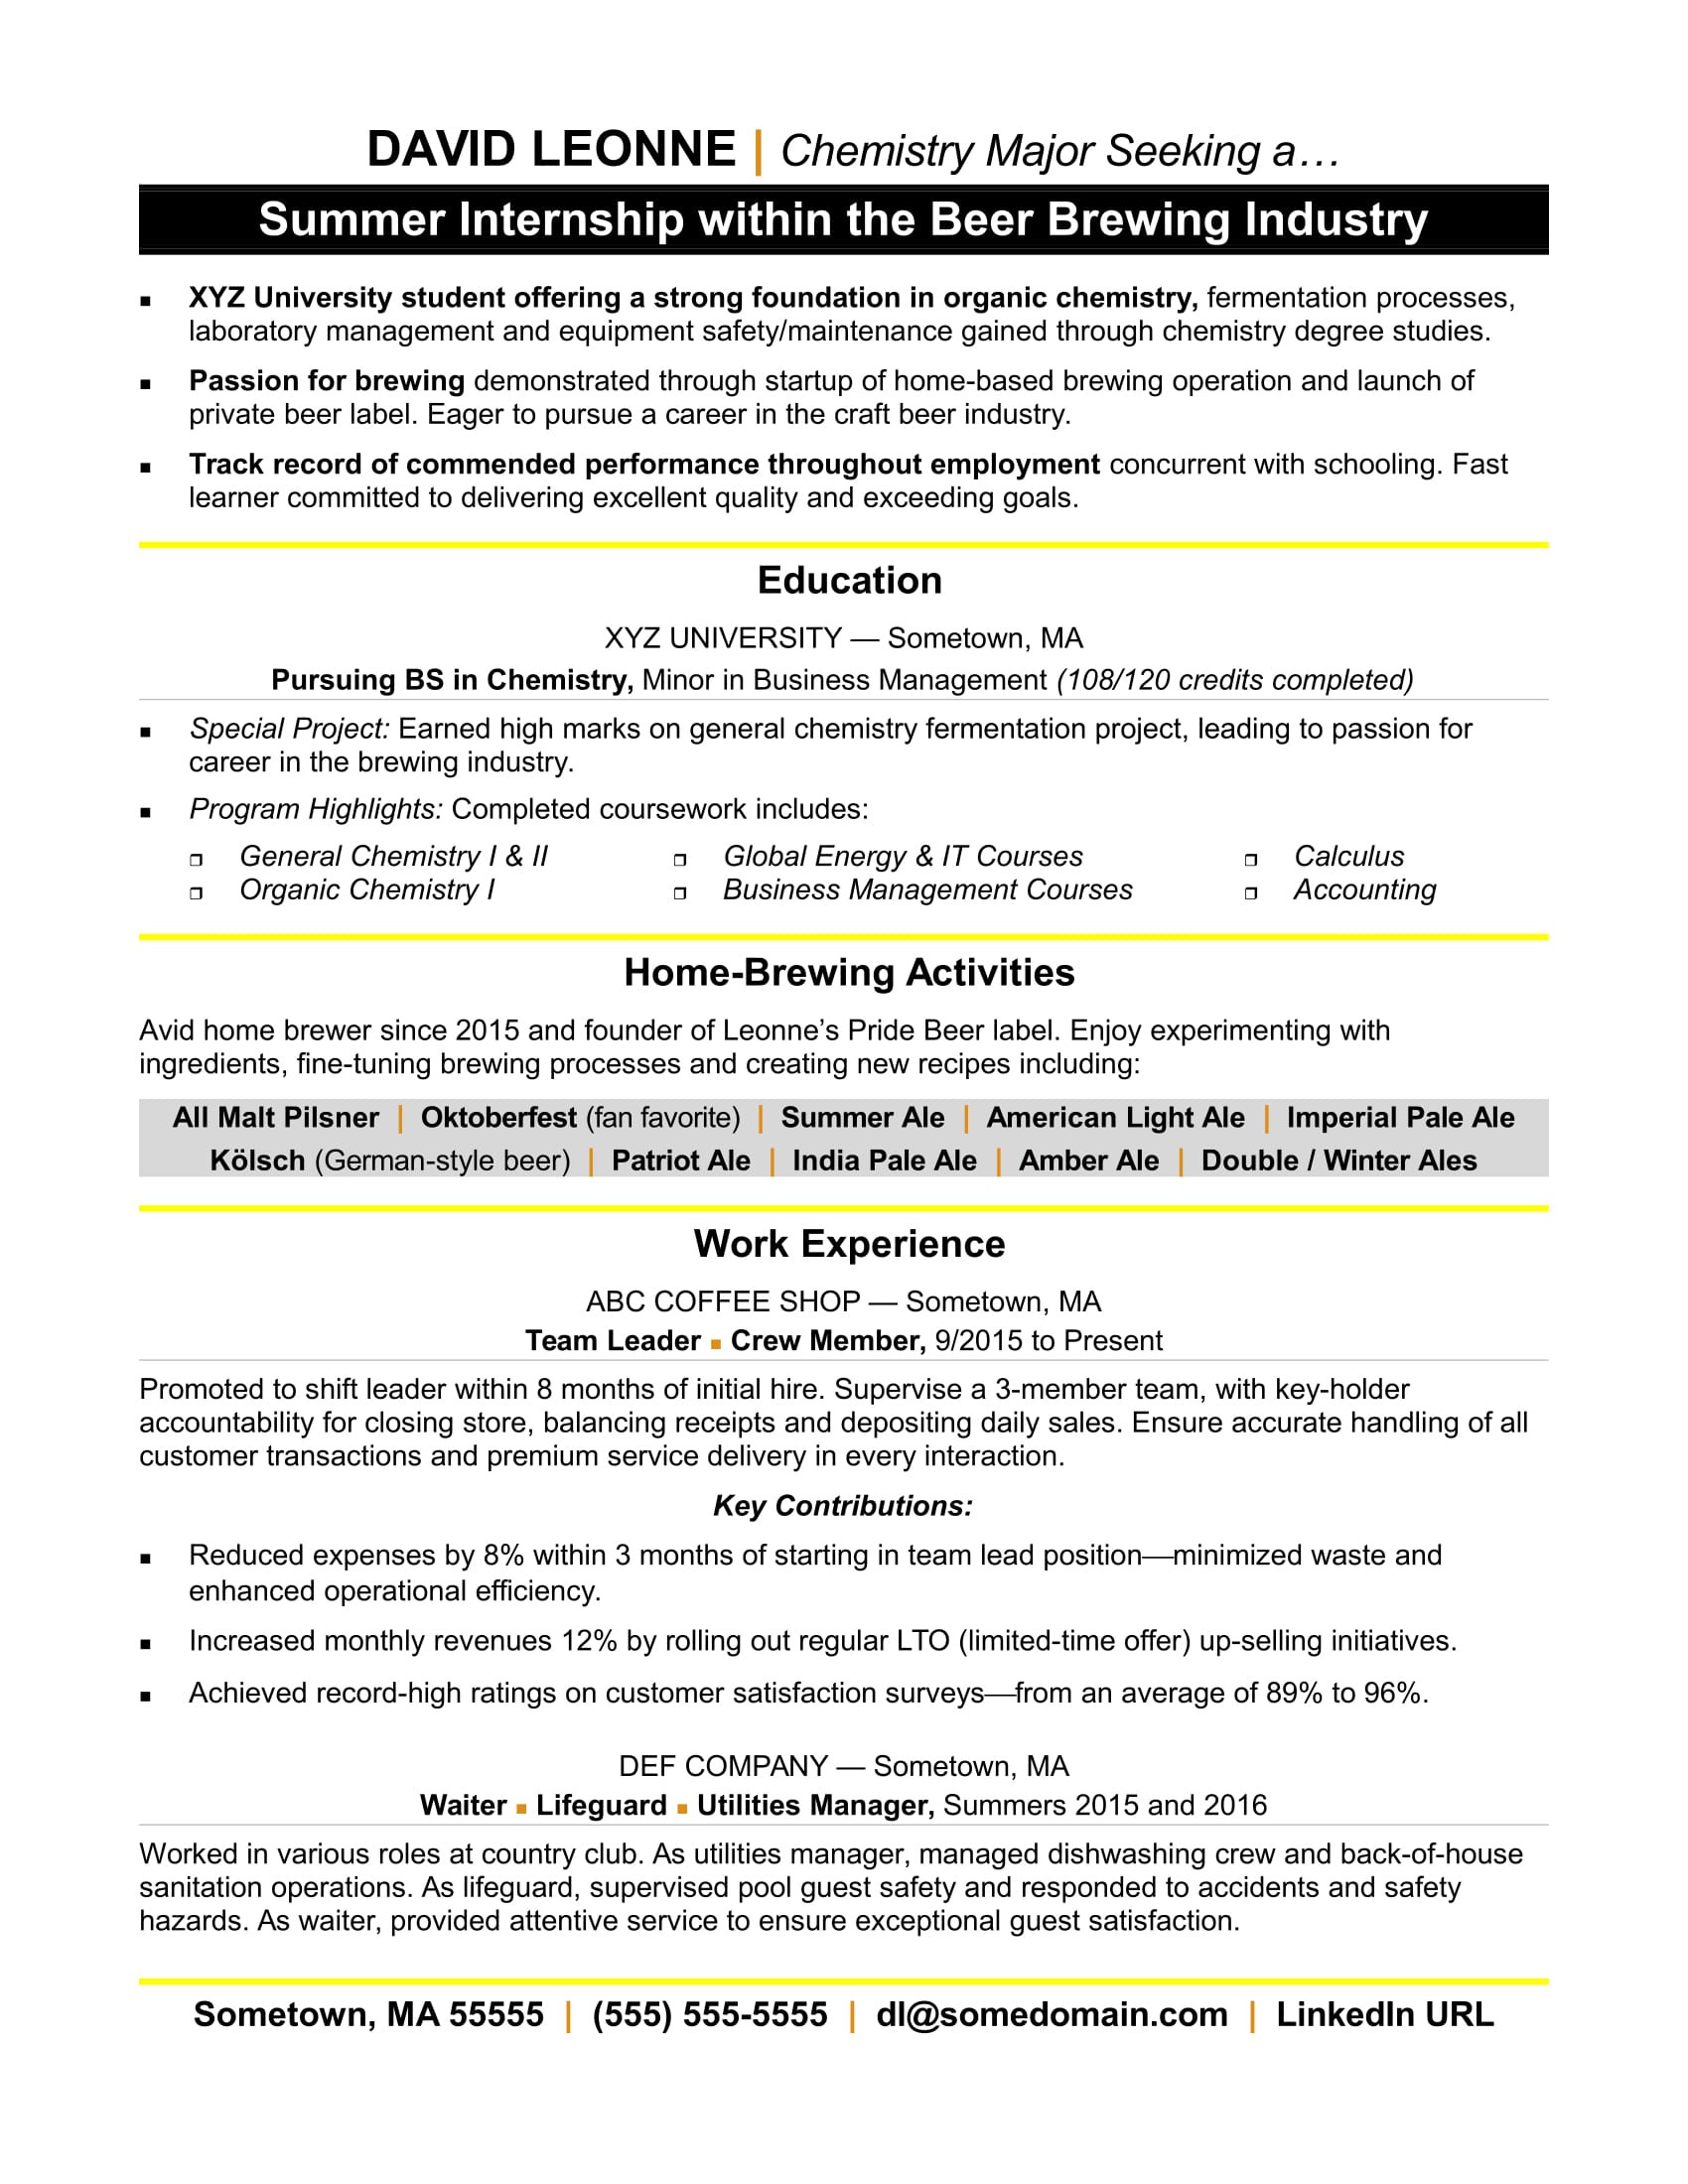 Sample Resume for College Student Applying for Internship Resume for Internship